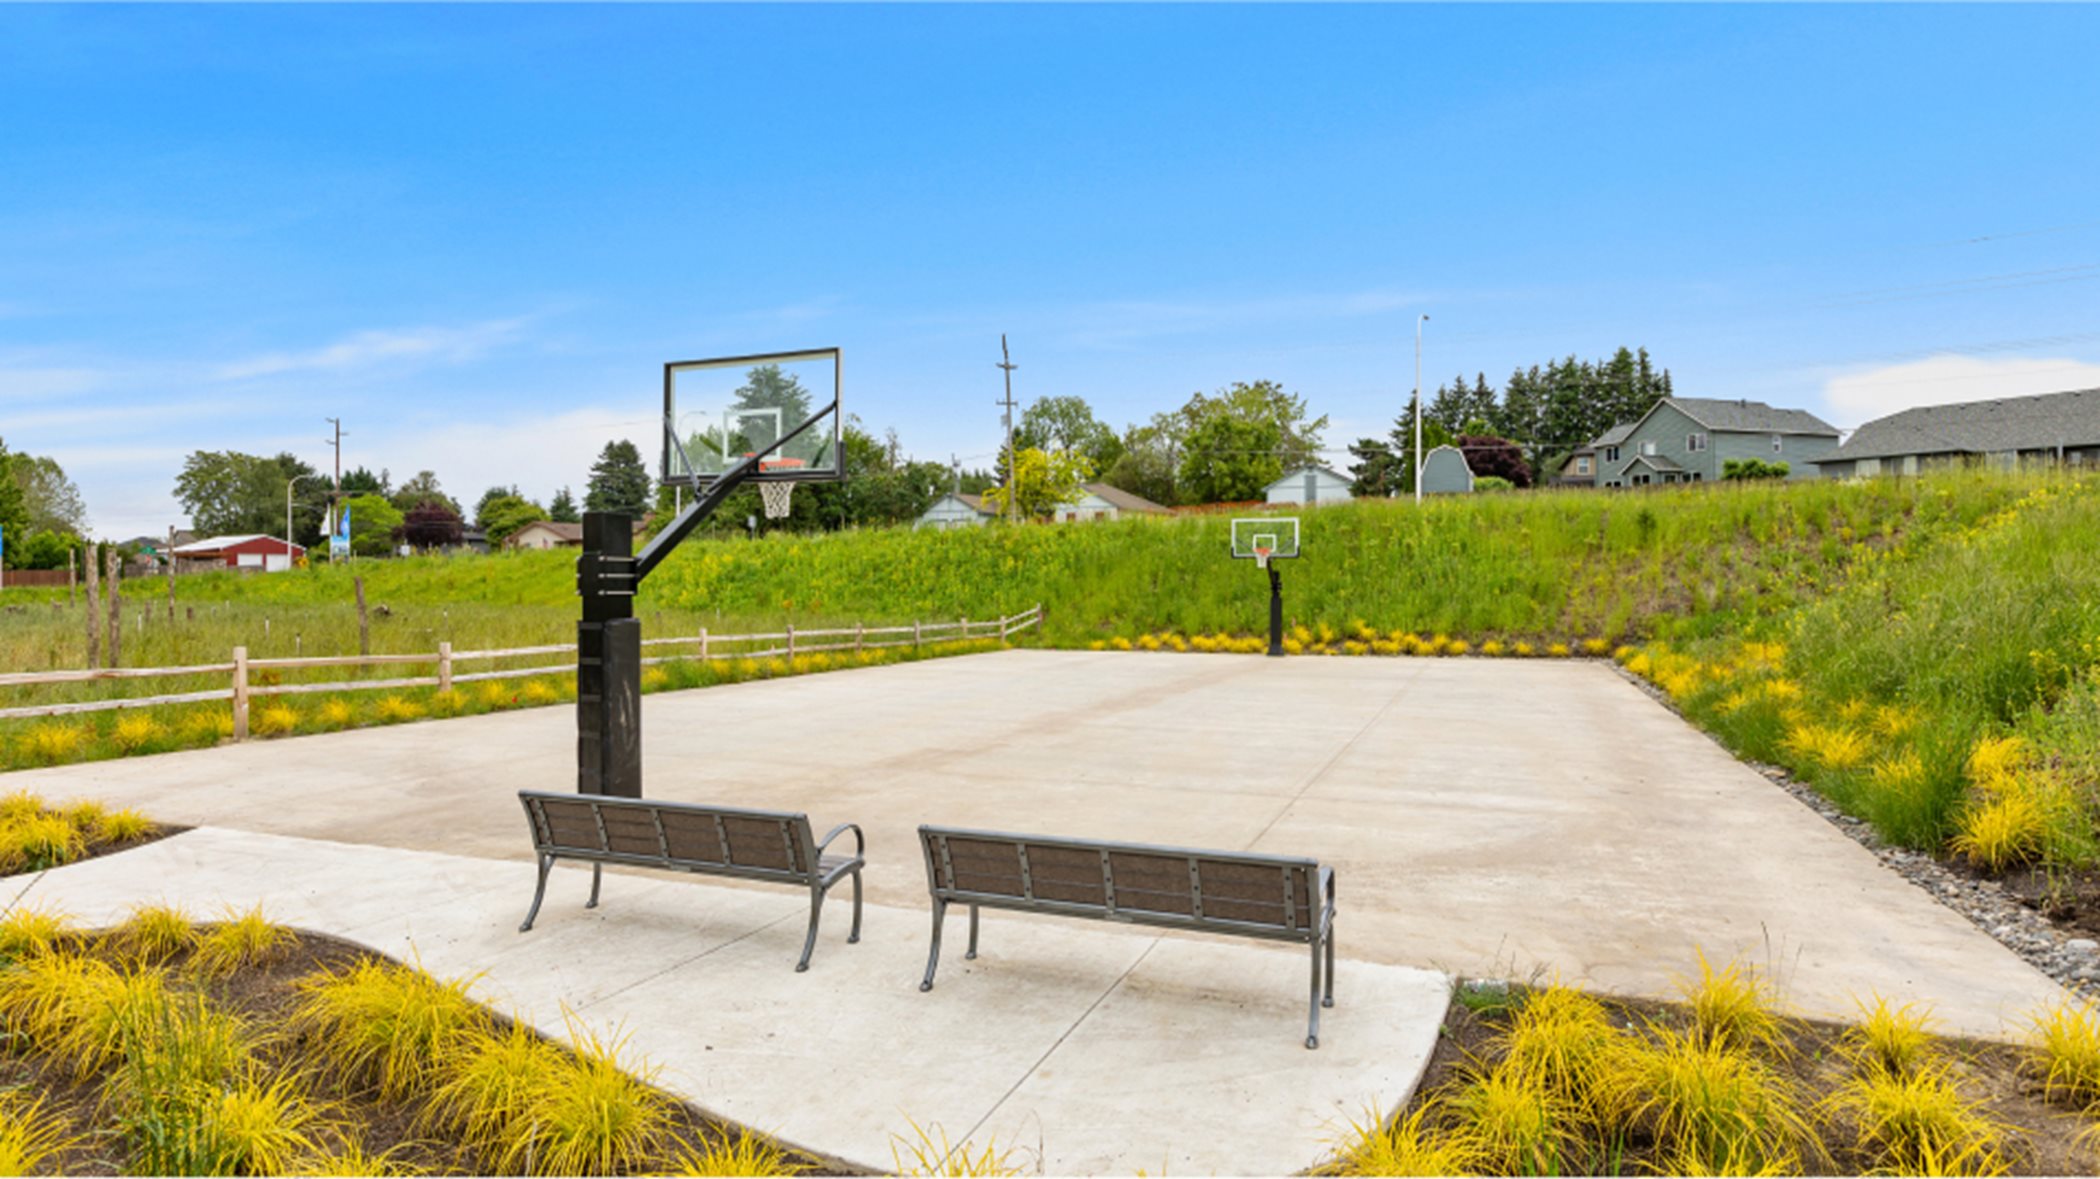 Brynhill basketball court